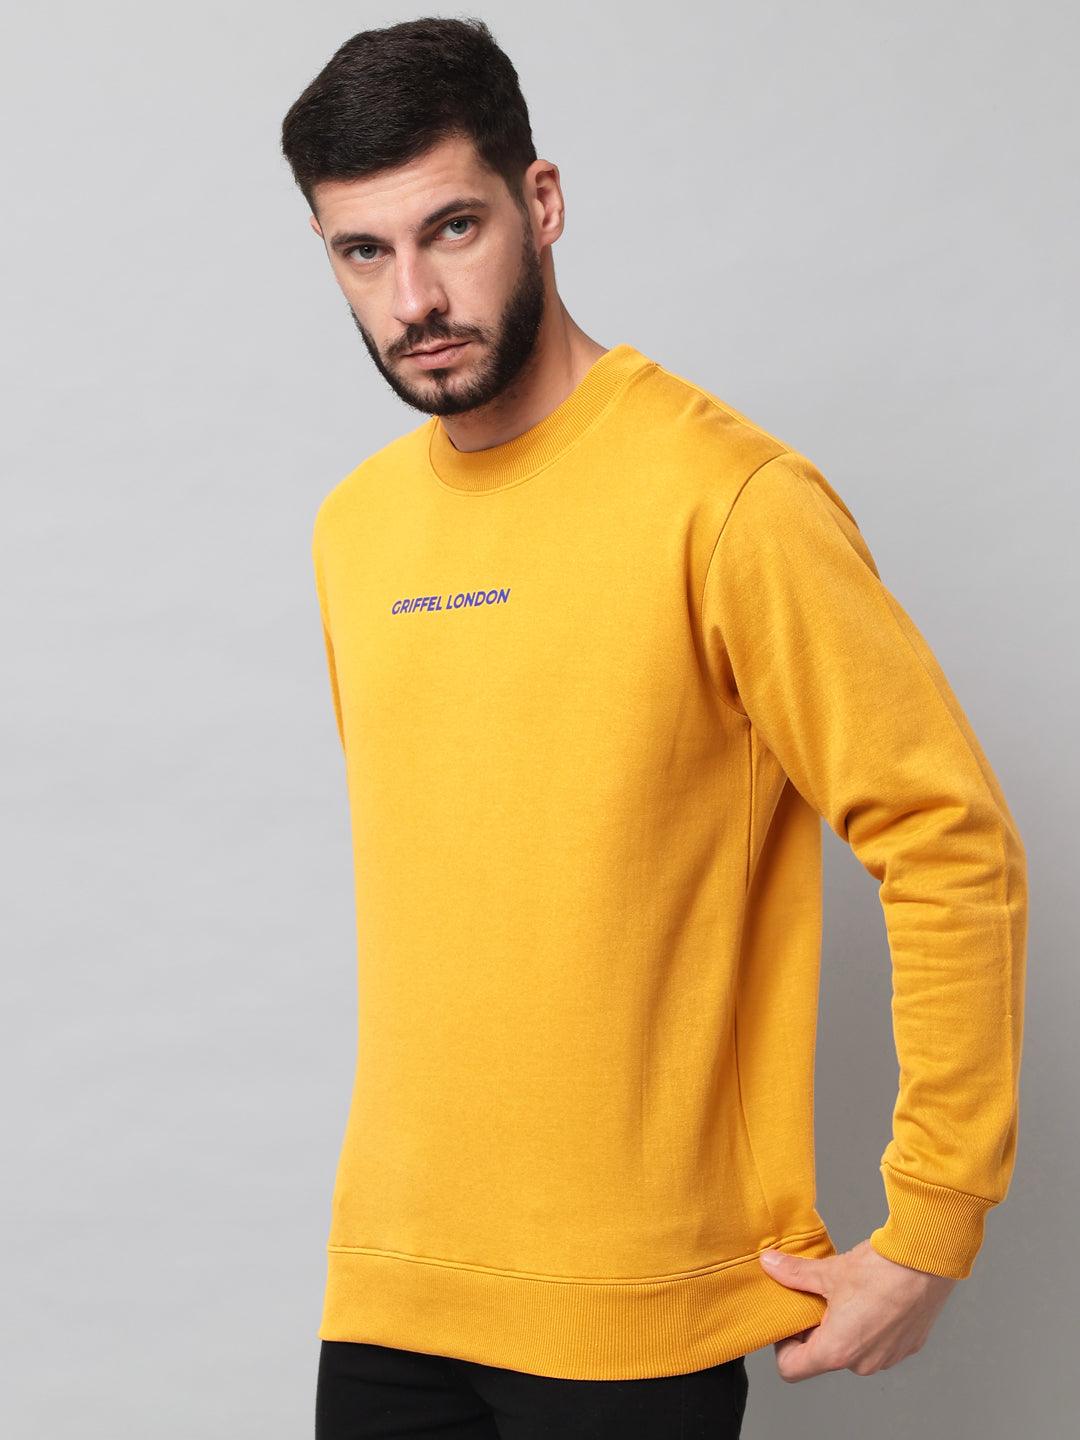 Griffel Men's Cotton Fleece Round Neck Mustard Sweatshirt with Full Sleeve and Front Logo Print - griffel